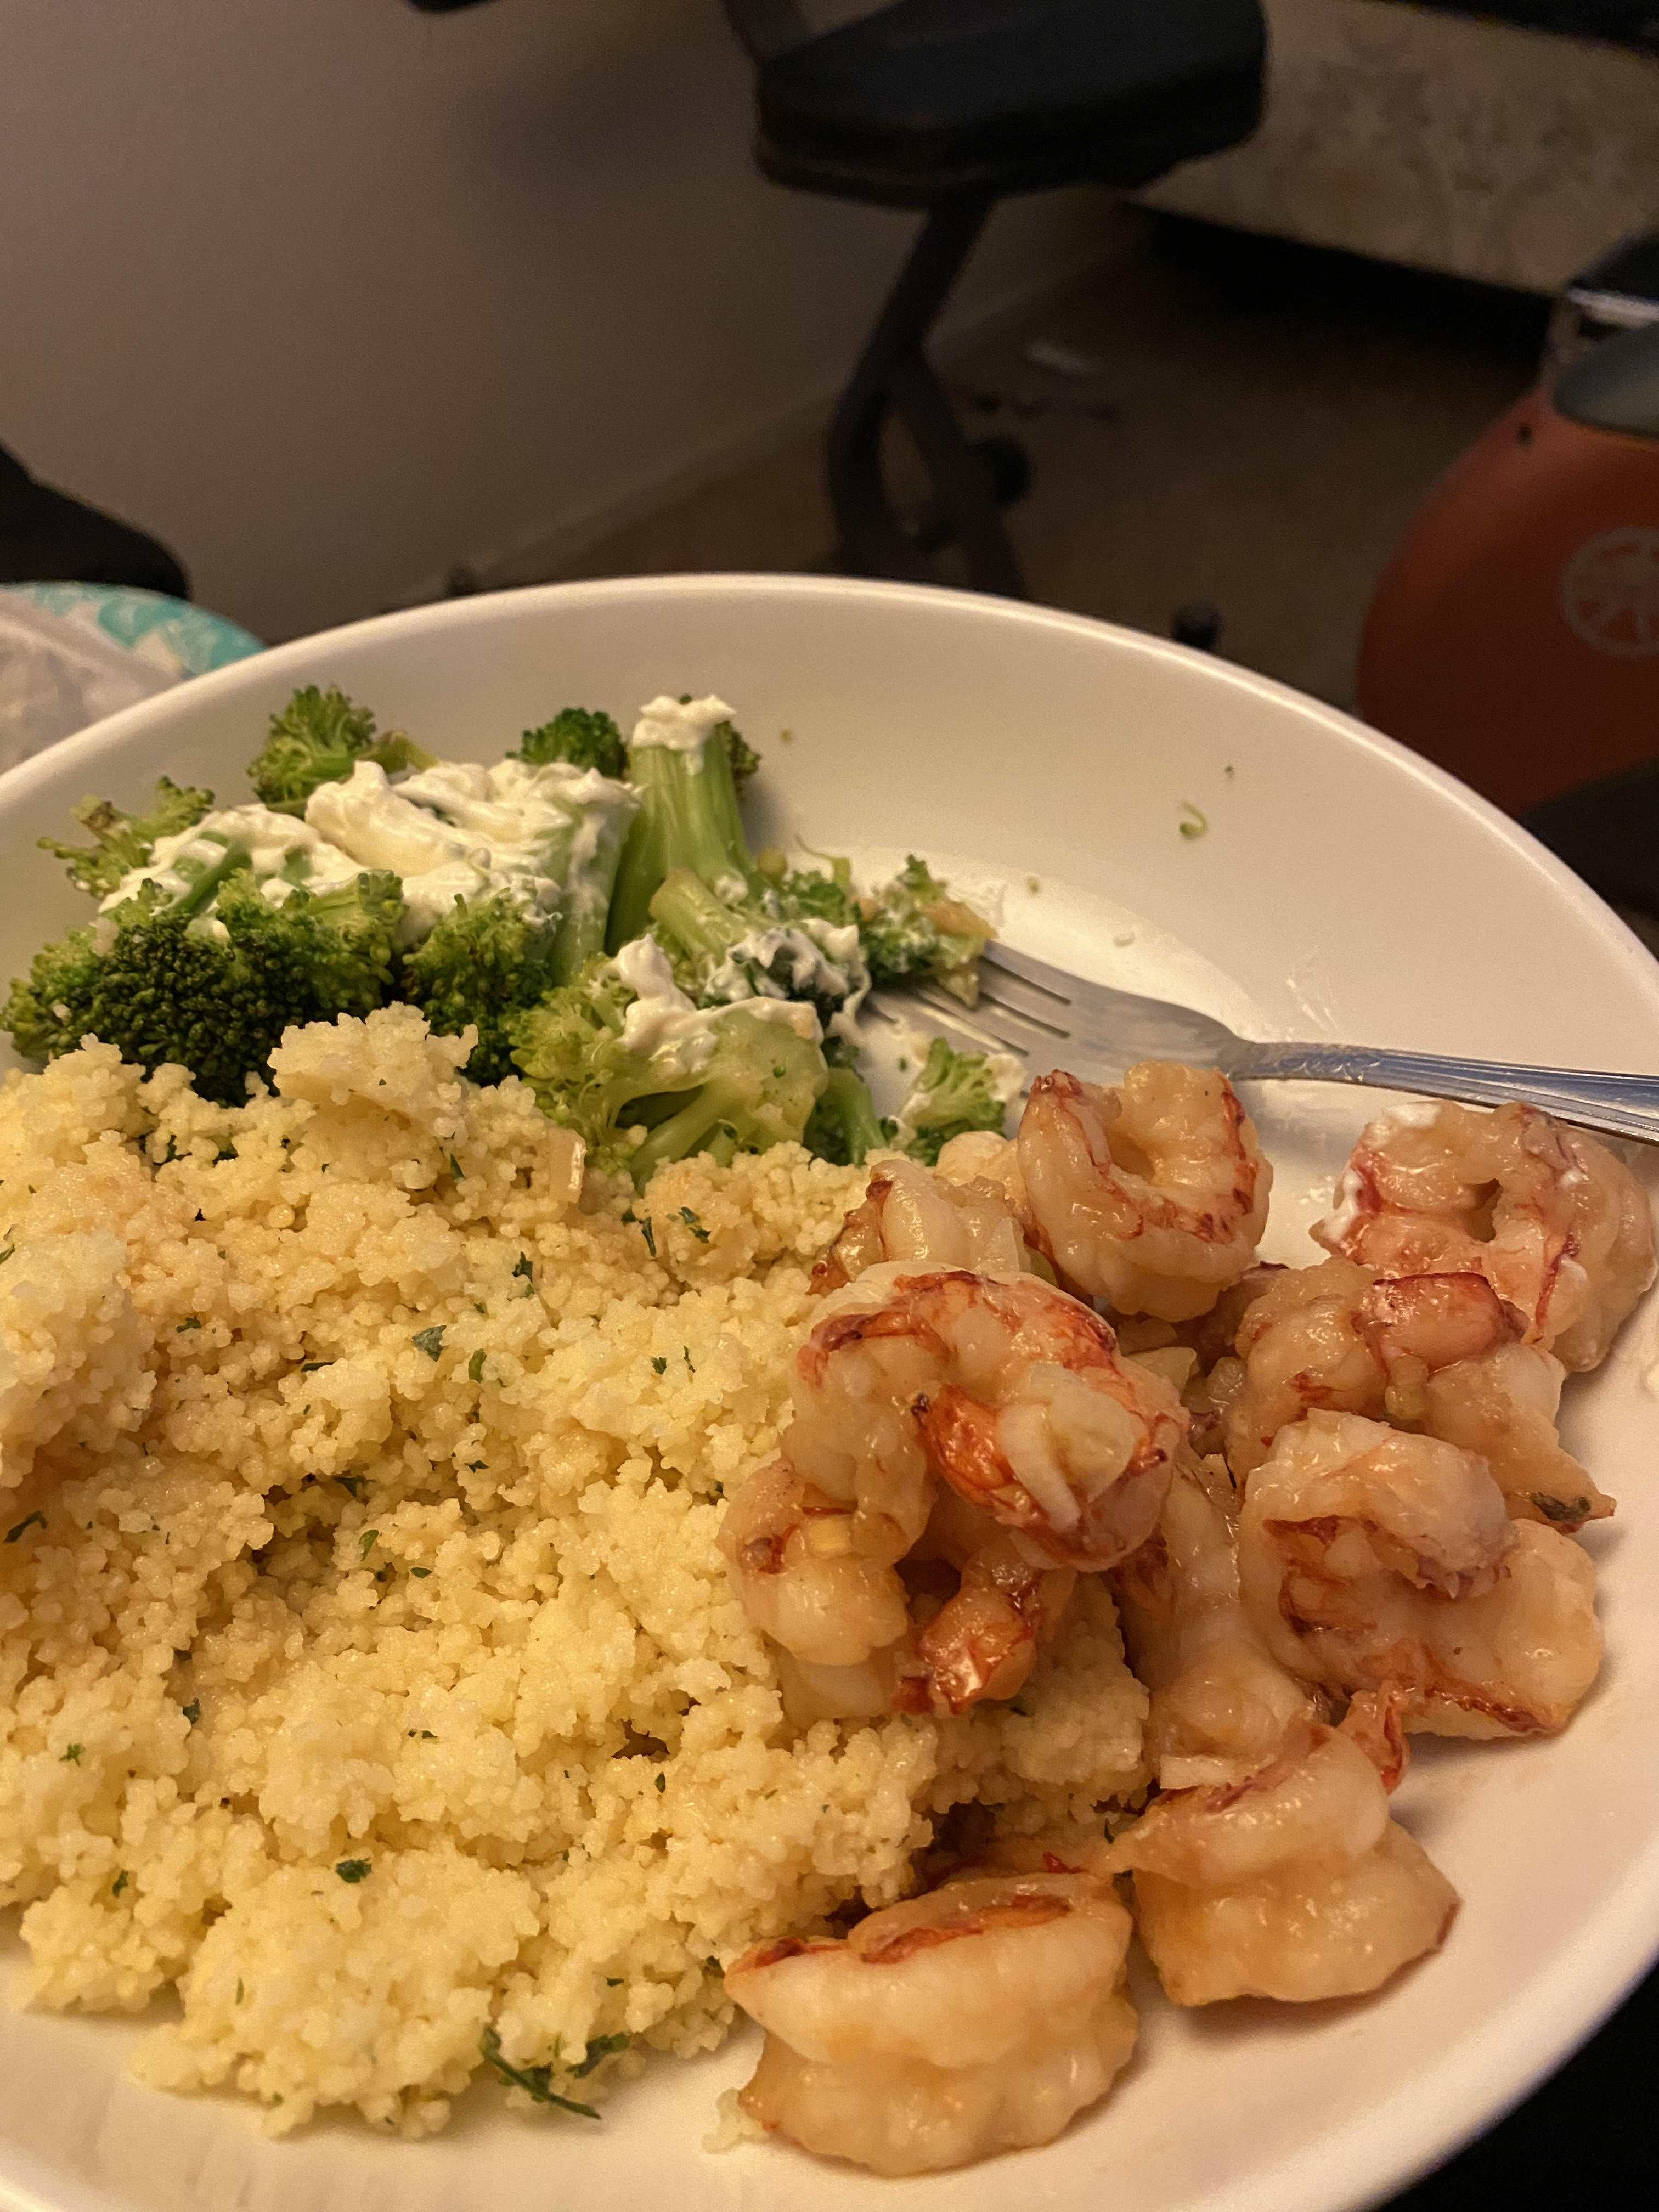 Honey garlic shrimp, couscous and broccoli